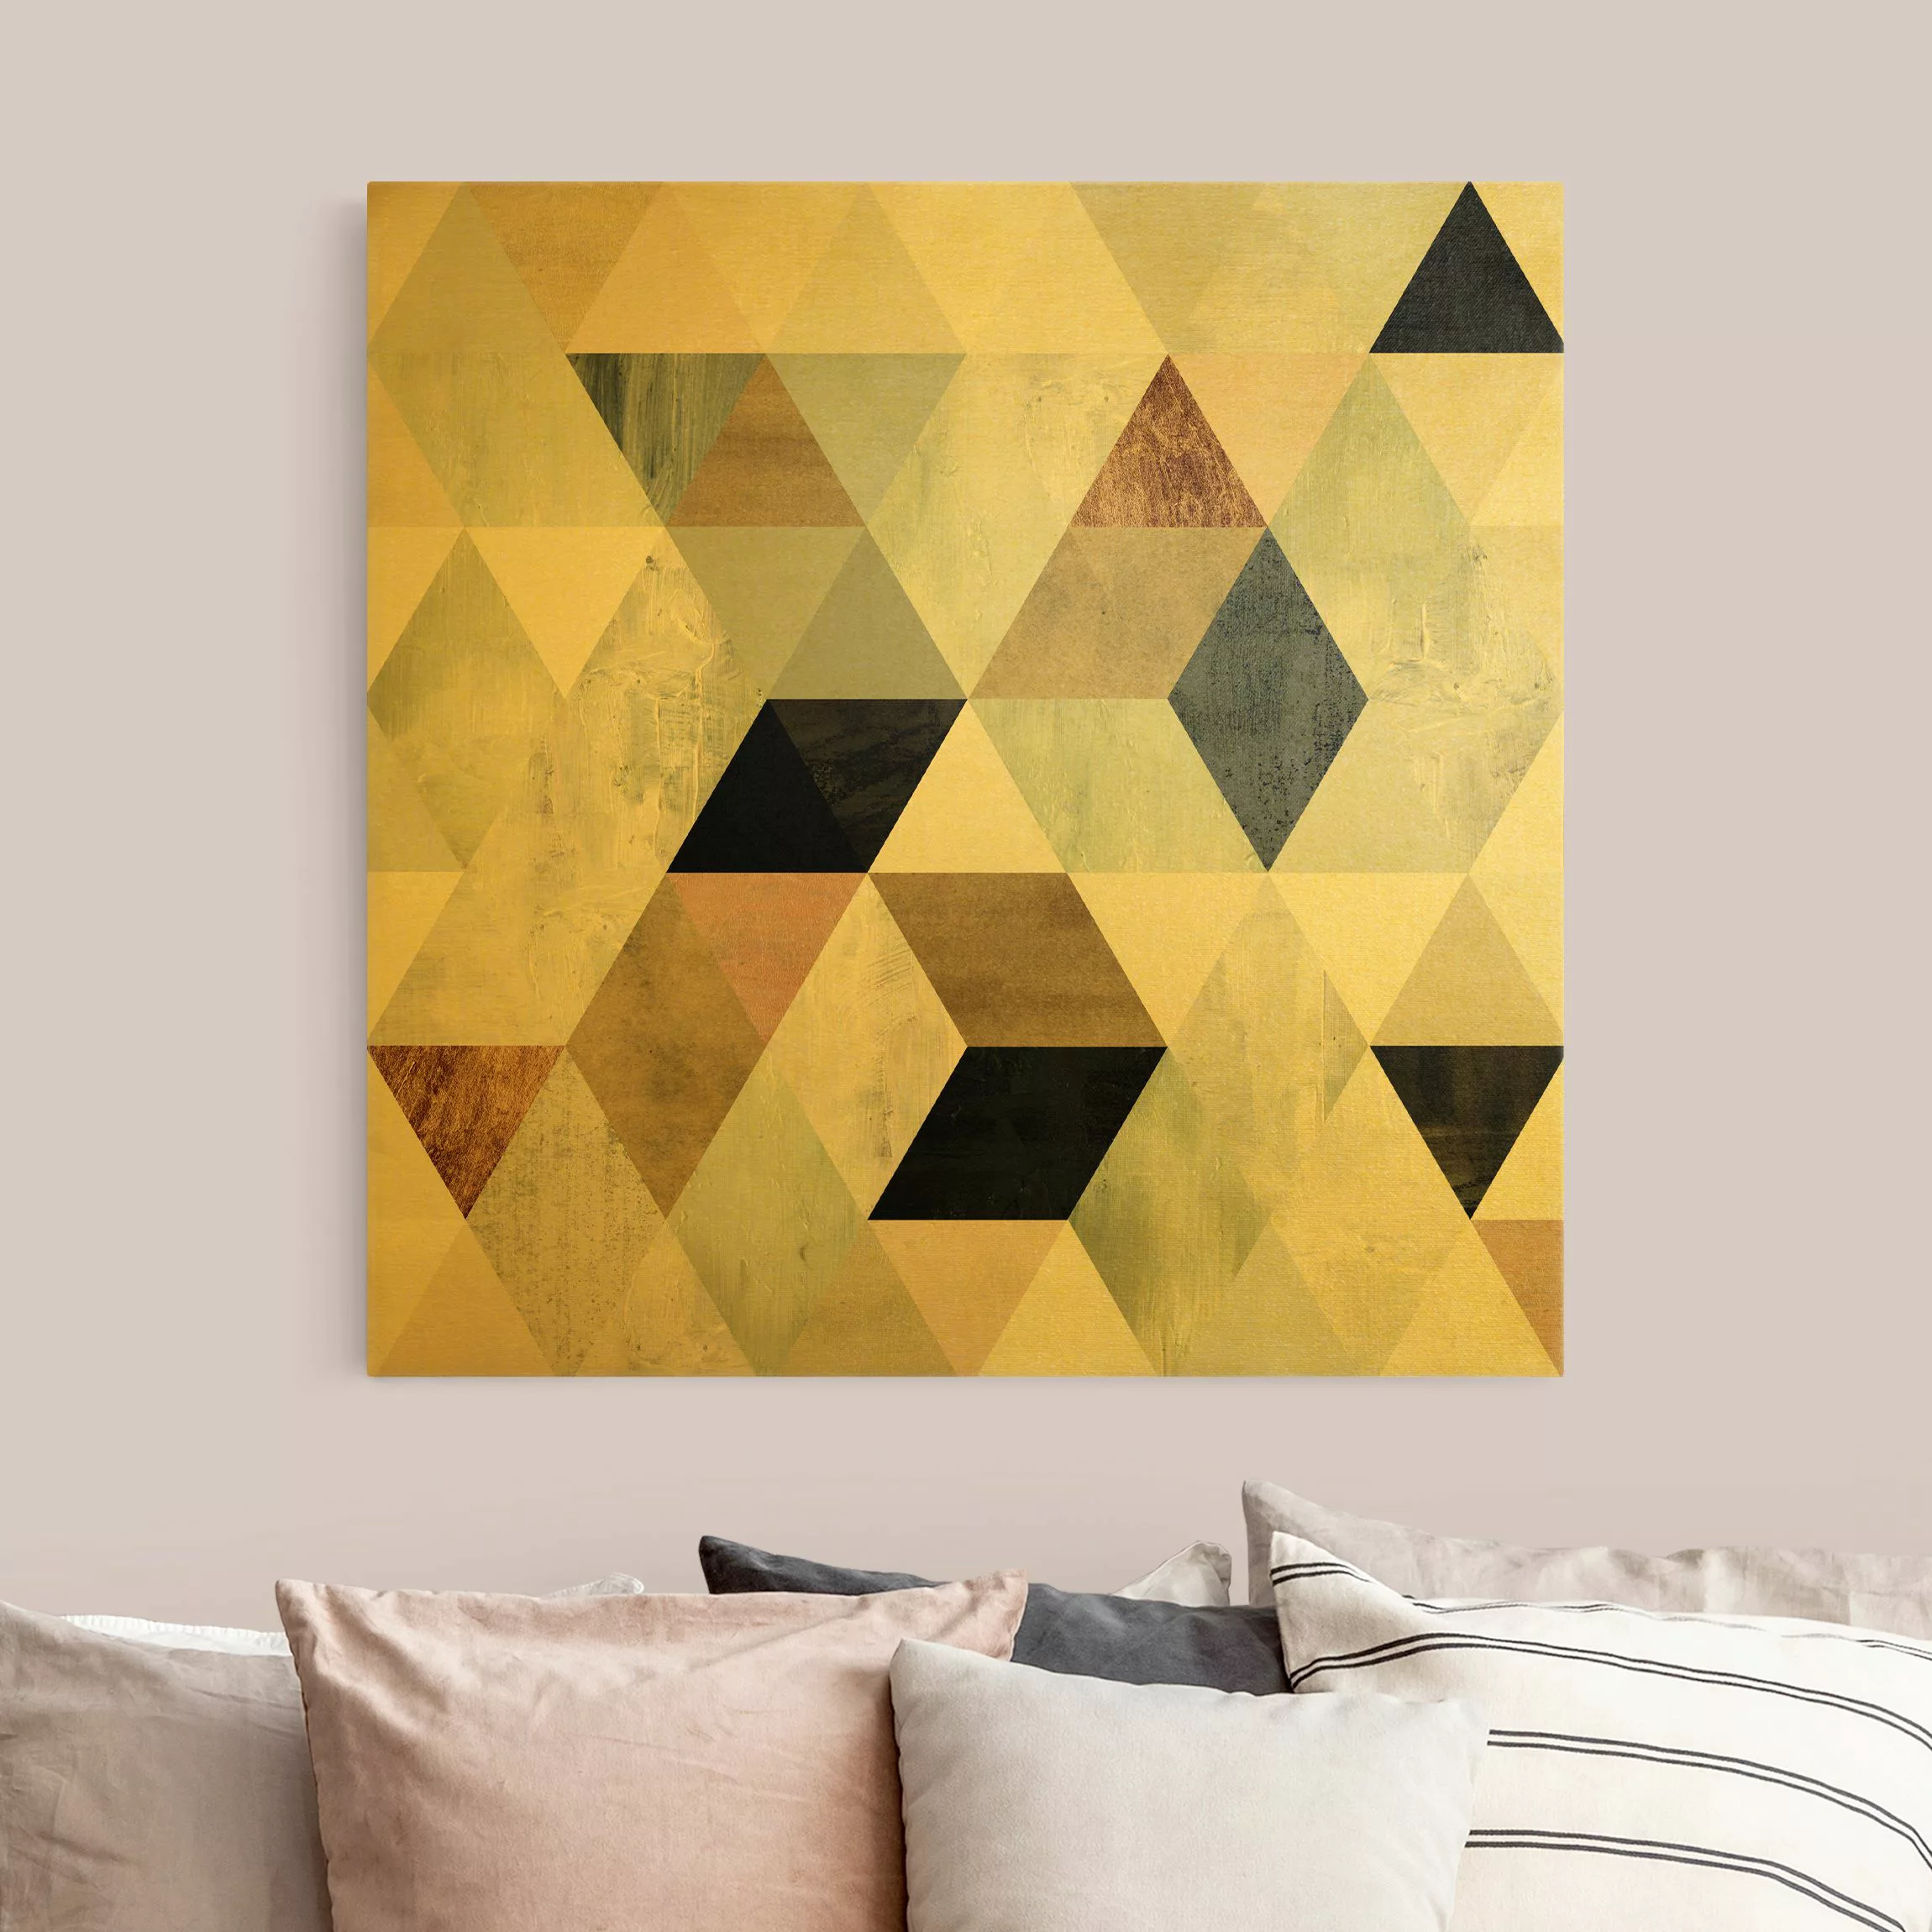 Leinwandbild Gold Aquarell-Mosaik mit Dreiecken II günstig online kaufen